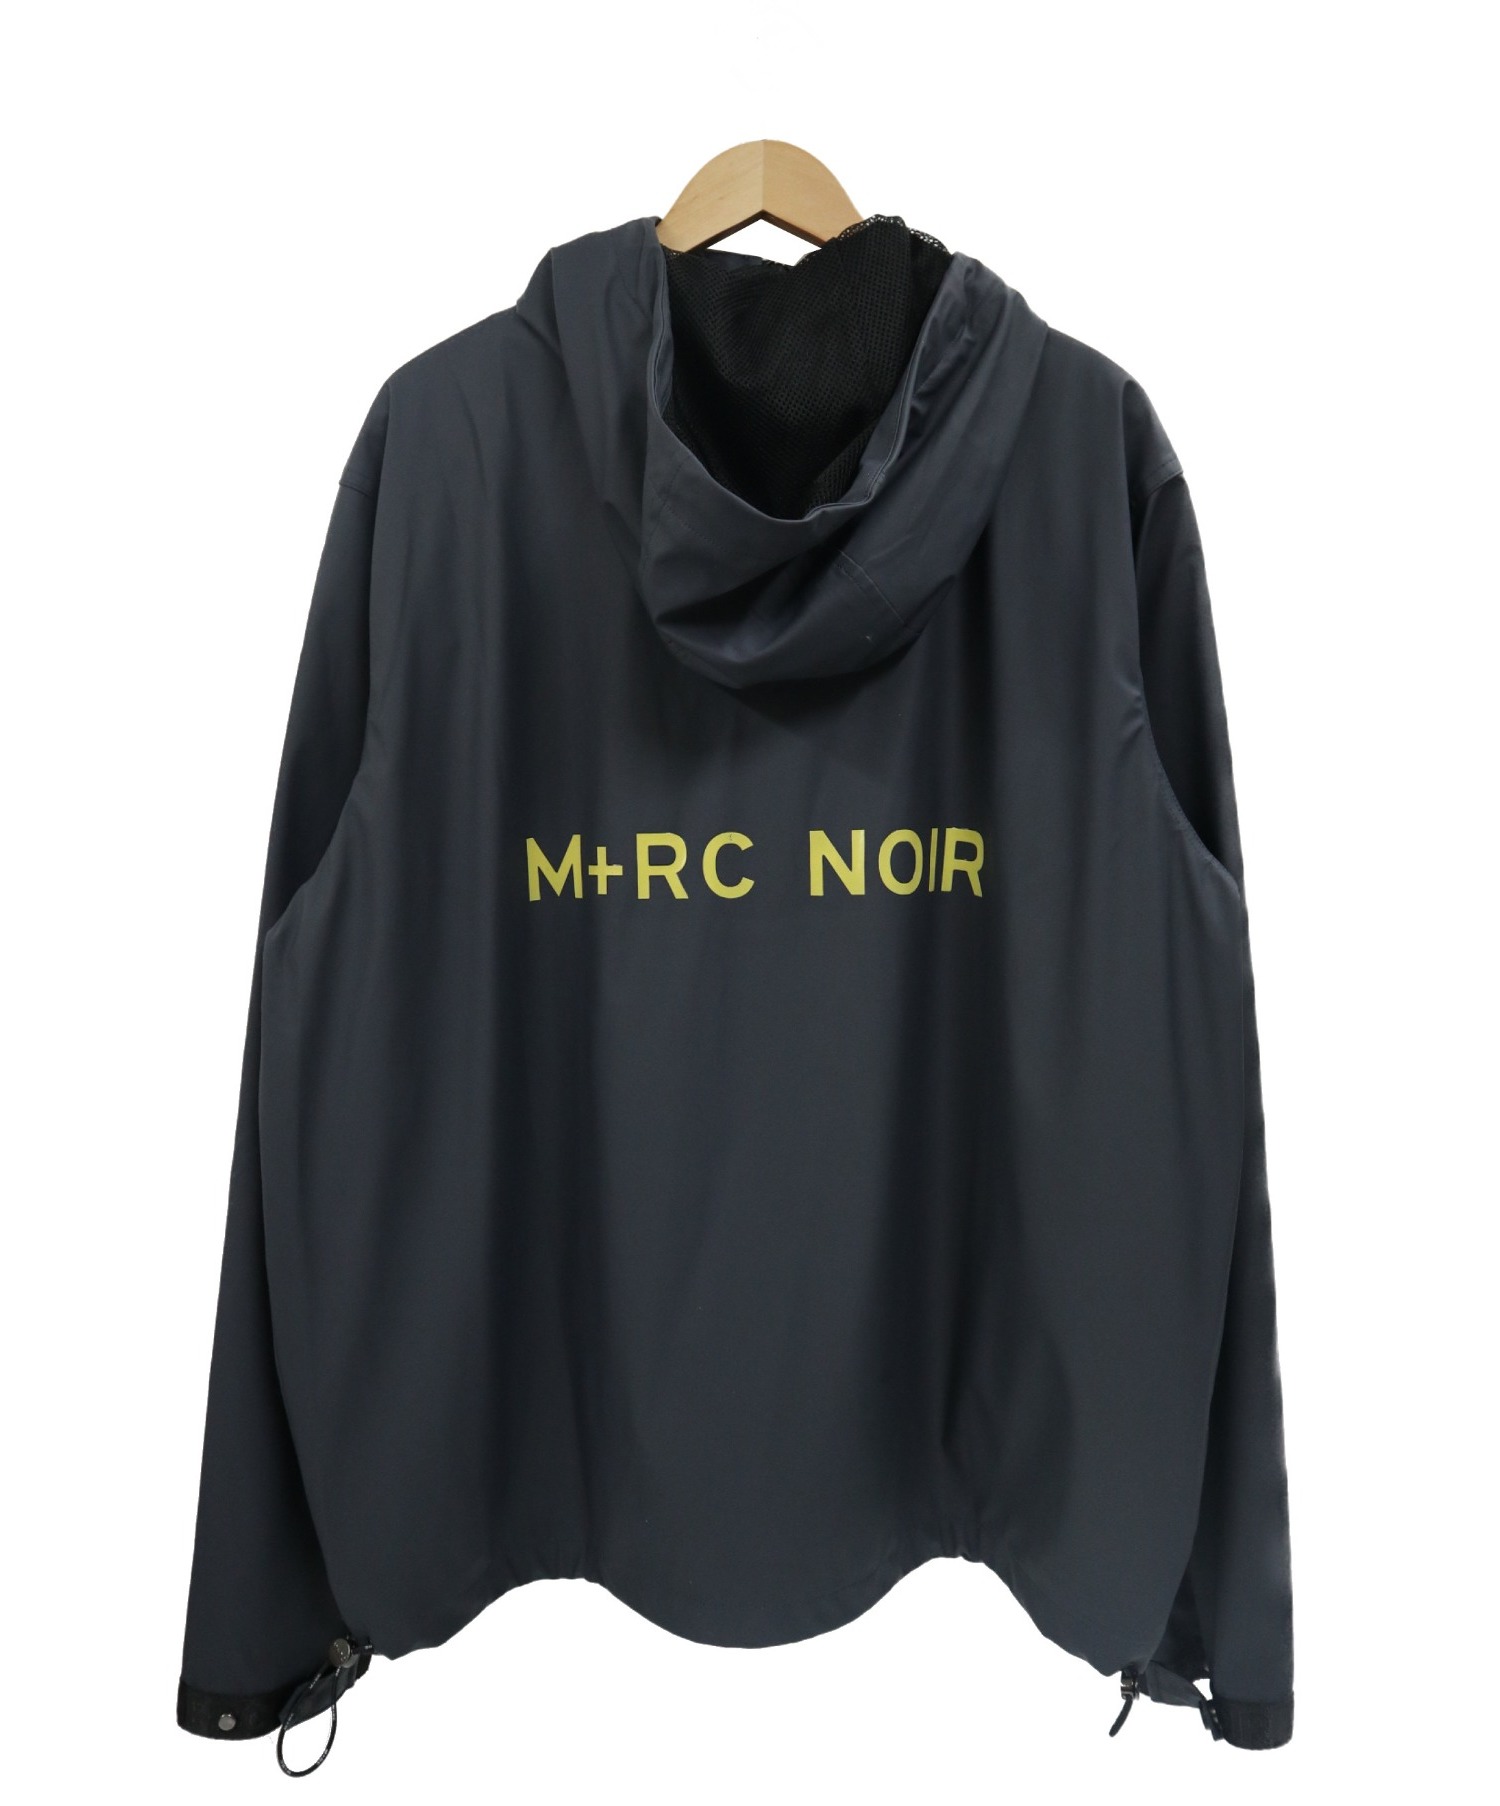 M+RC NOIR (マルシェノア) アノラックパーカー(プルオーバージャケット) グレー サイズ:L